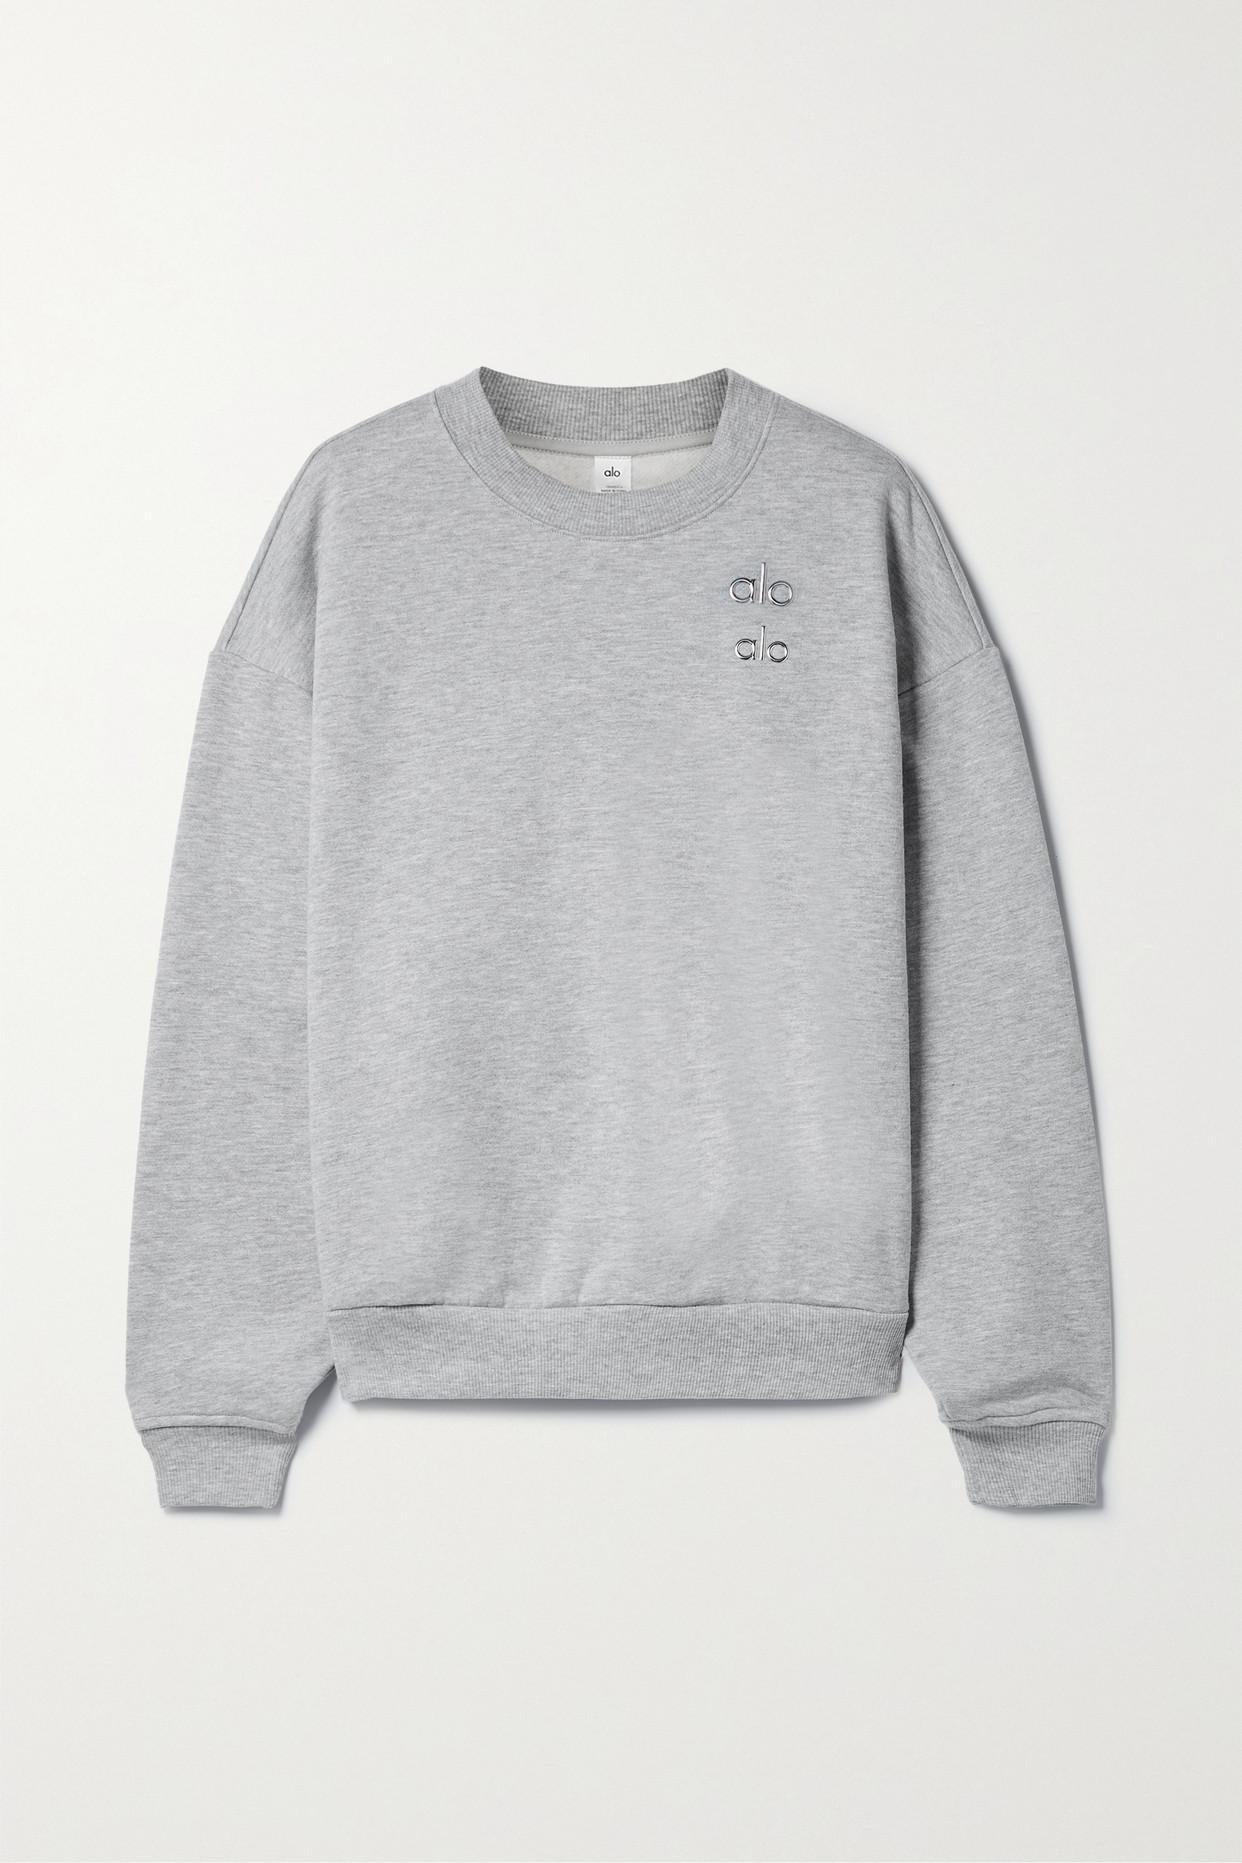 Alo Yoga Accolade Cotton-blend Jersey Sweatshirt in Gray